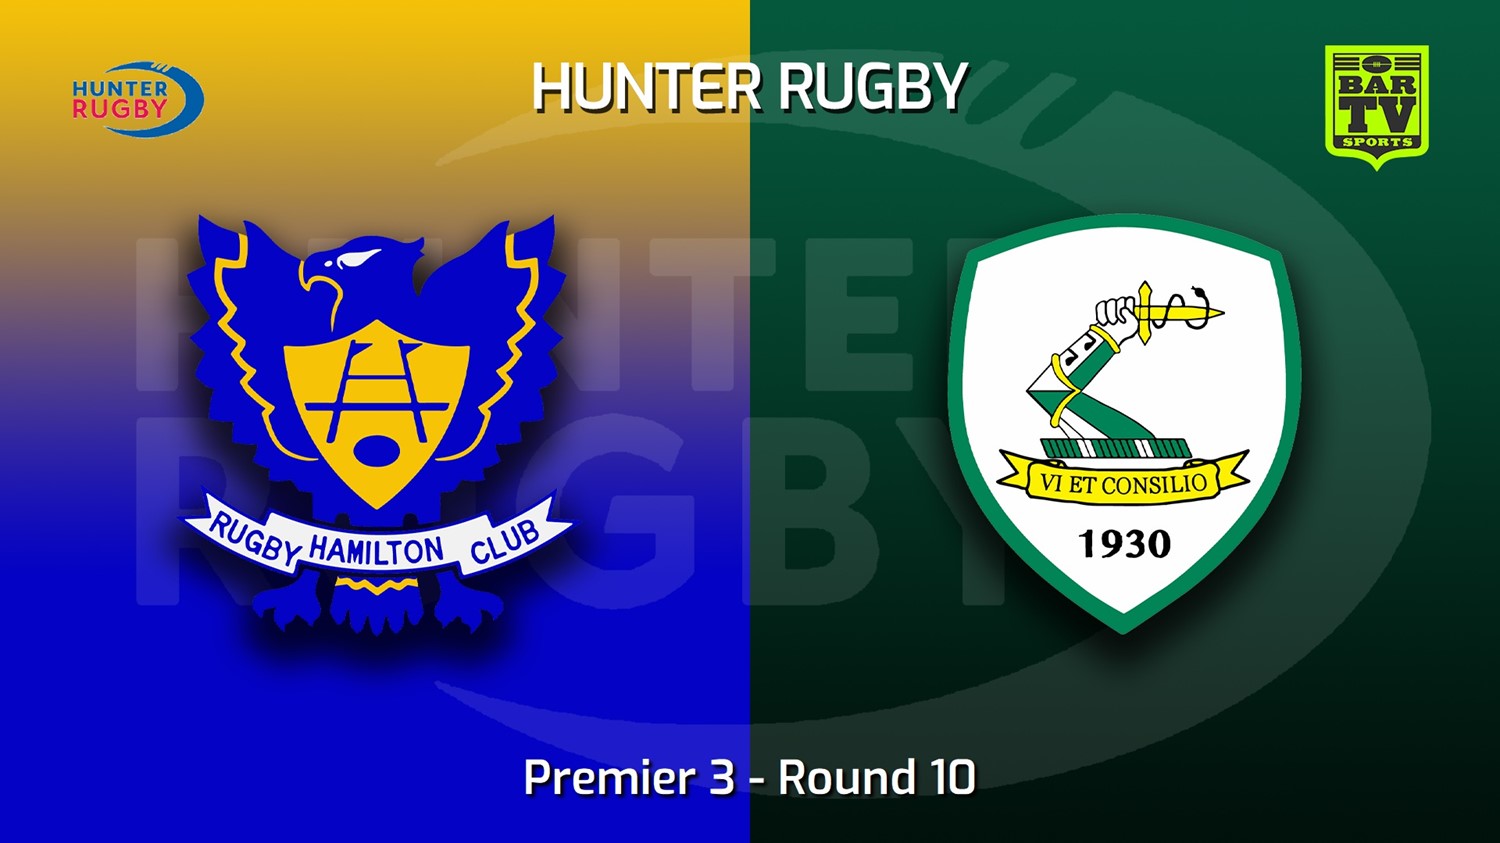 220702-Hunter Rugby Round 10 - Premier 3 - Hamilton Hawks v Merewether Carlton Slate Image